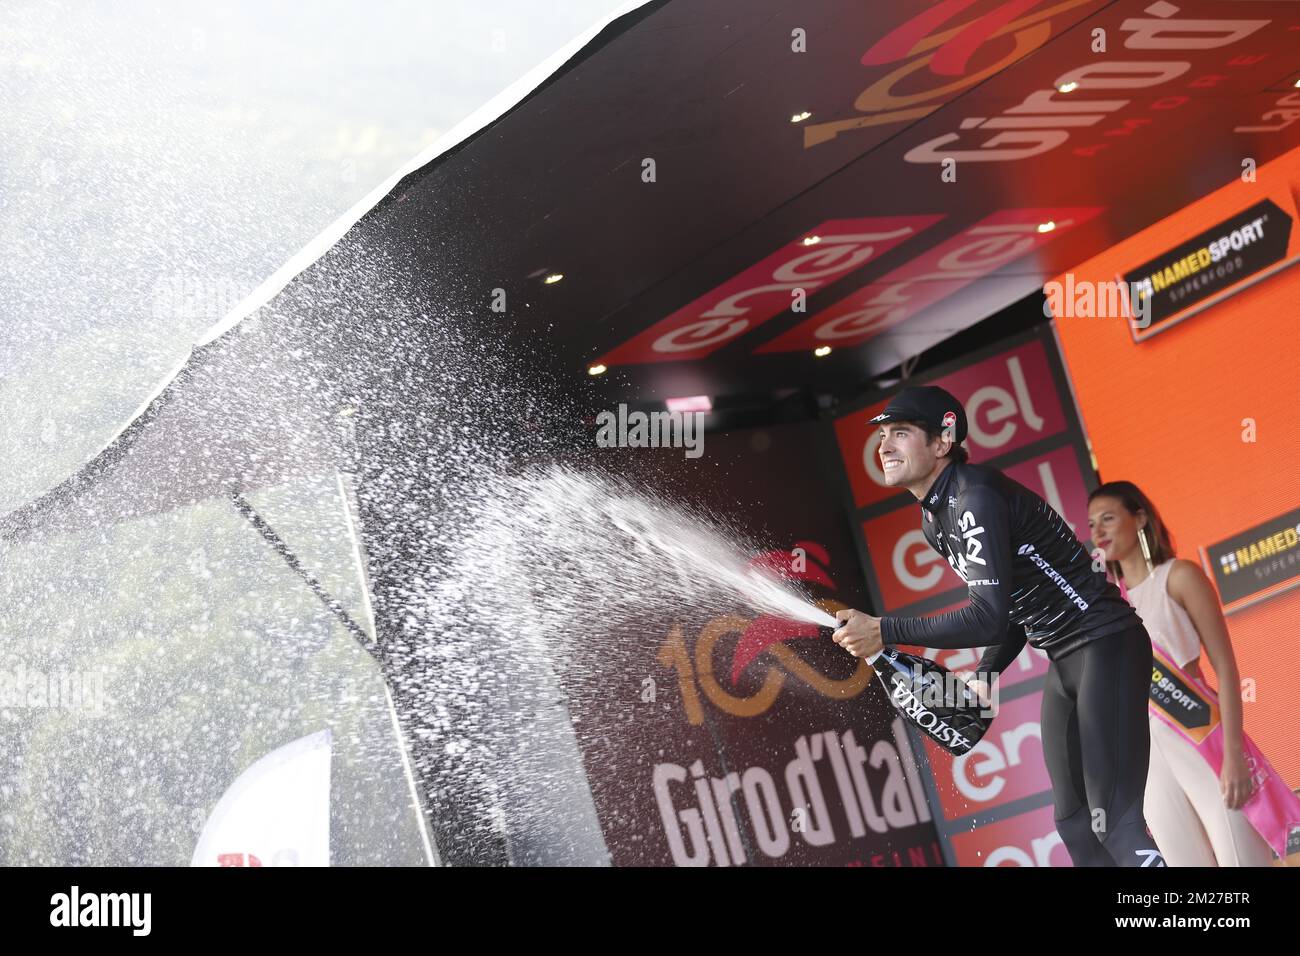 Spanish Mikel Landa of Team Sky celebrates on the podium after winning the nineteenth stage of the Giro 2017 cycling tour, 191 km from San Candido/Innichen to Piancavallo, Italy, Friday 26 May 2017. BELGA PHOTO YUZURU SUNADA  Stock Photo